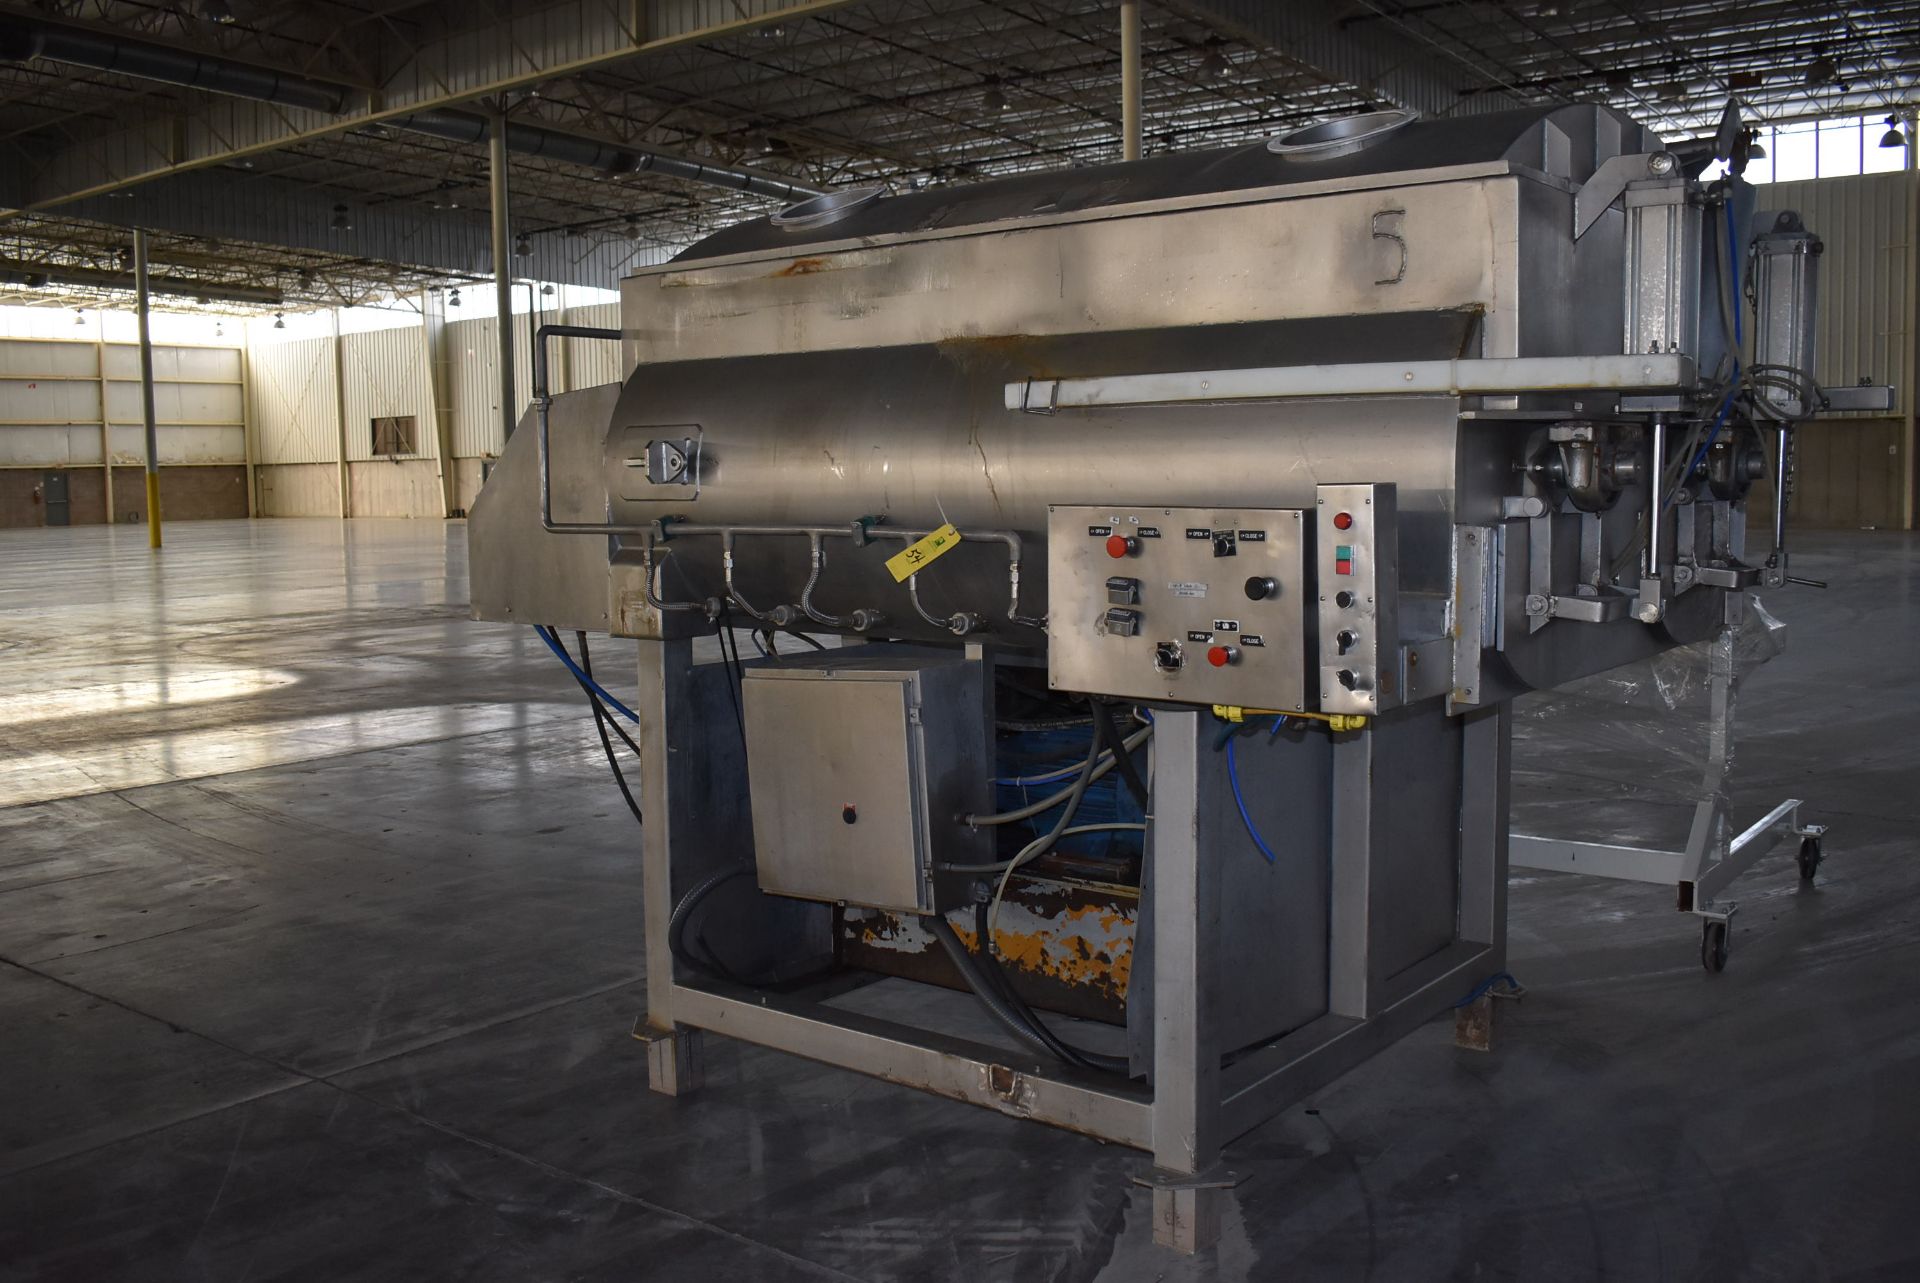 OHI Processing Equipment Model TM-5000 Vacuum Blender, Rated 4000 lb. Capacity, Stainless Steel